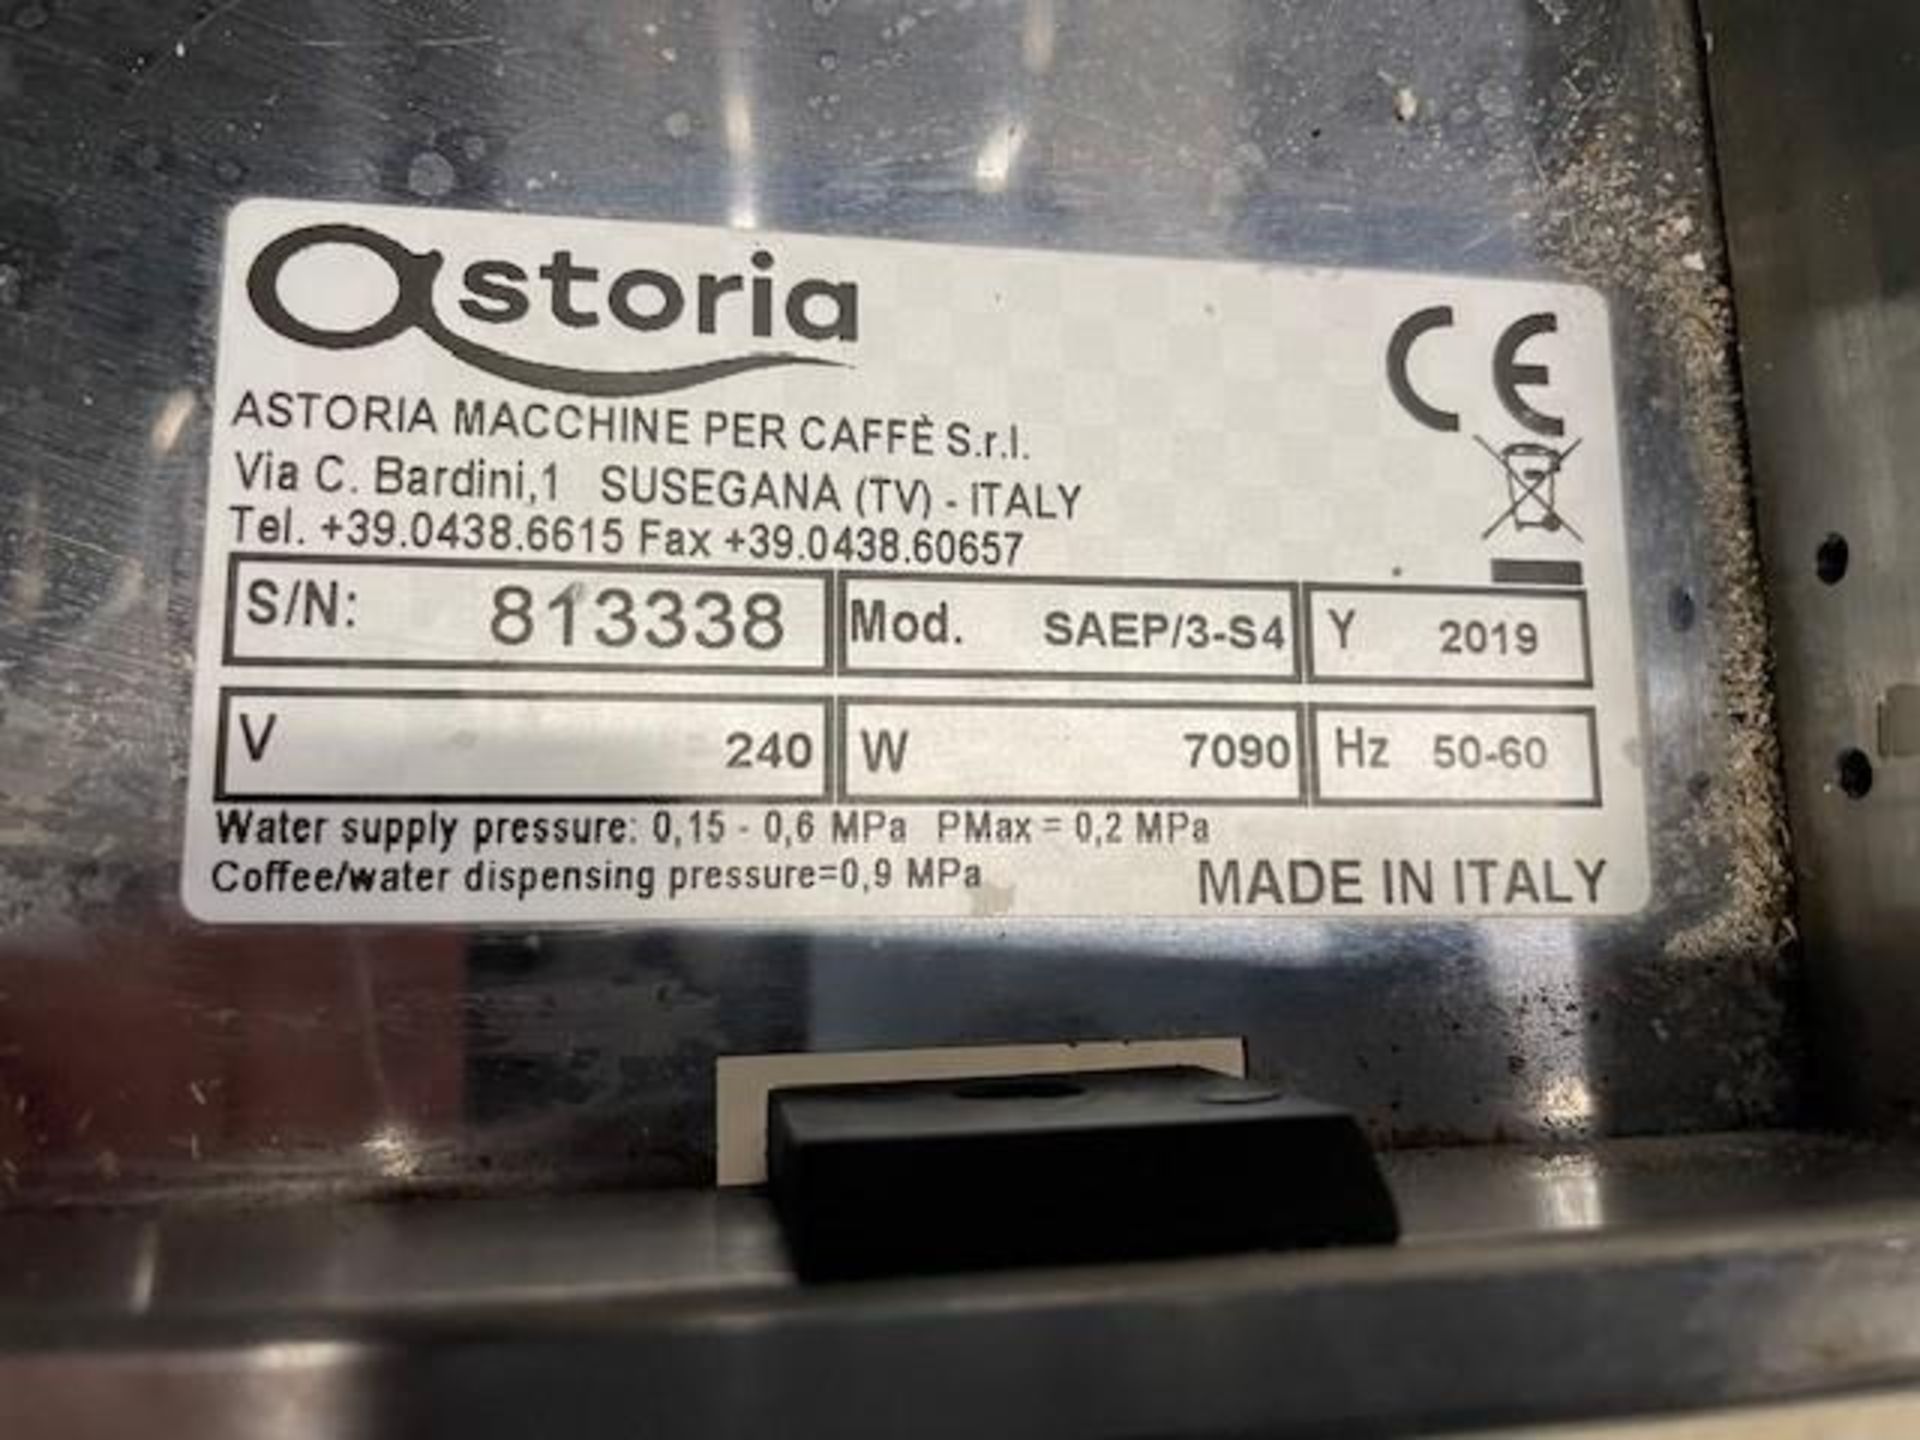 Astoria Storm Espresso Machine Single Phase - Image 10 of 10